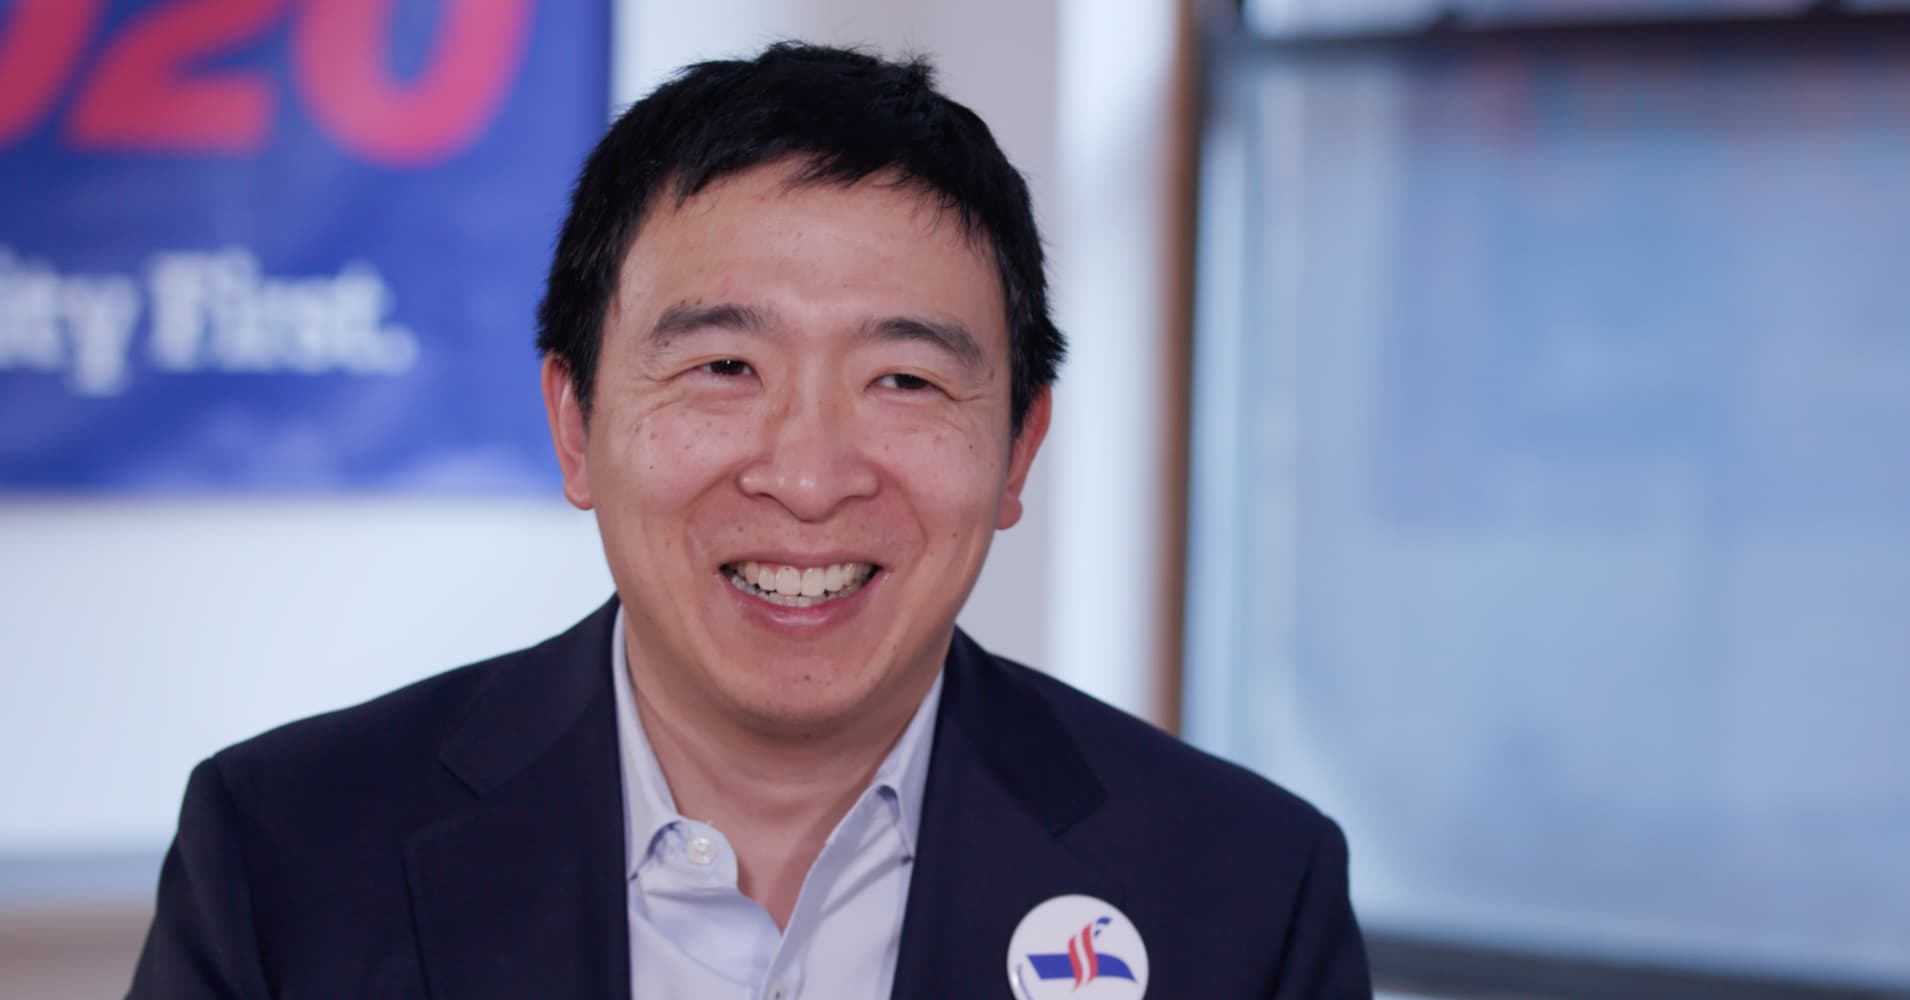 Democrat Andrew Yang running for president on platform of free cash